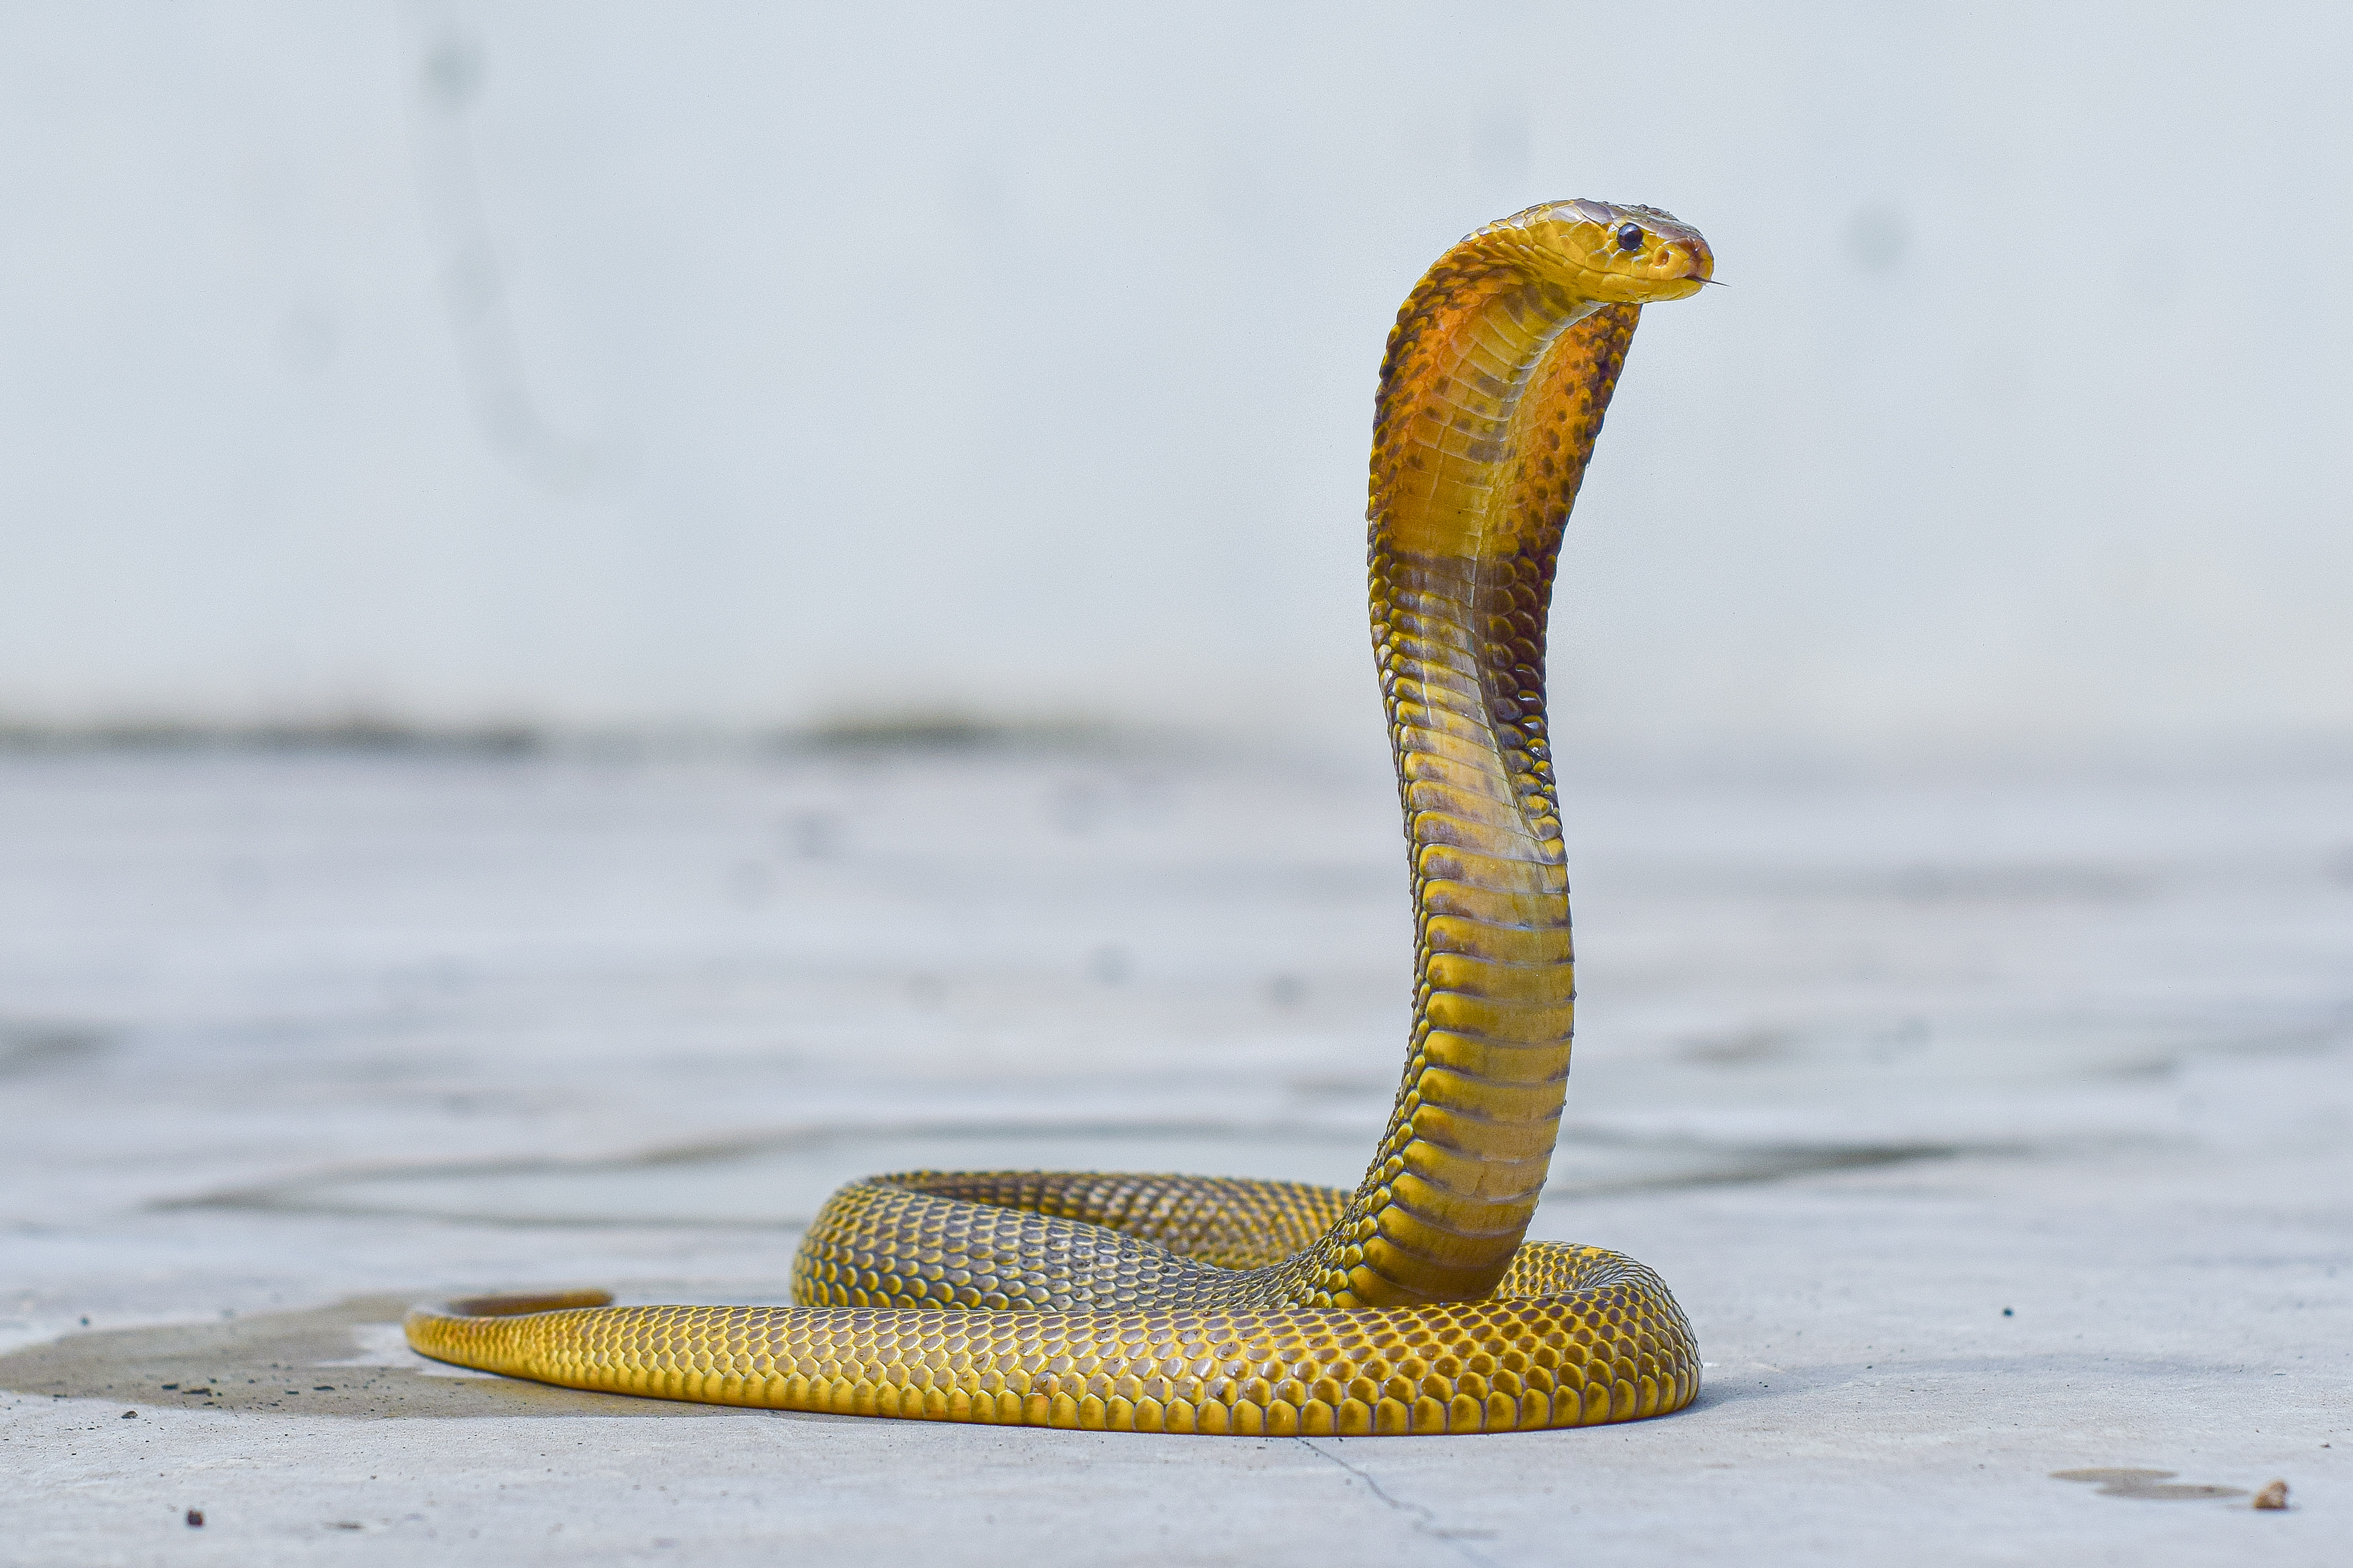 An image of king cobra